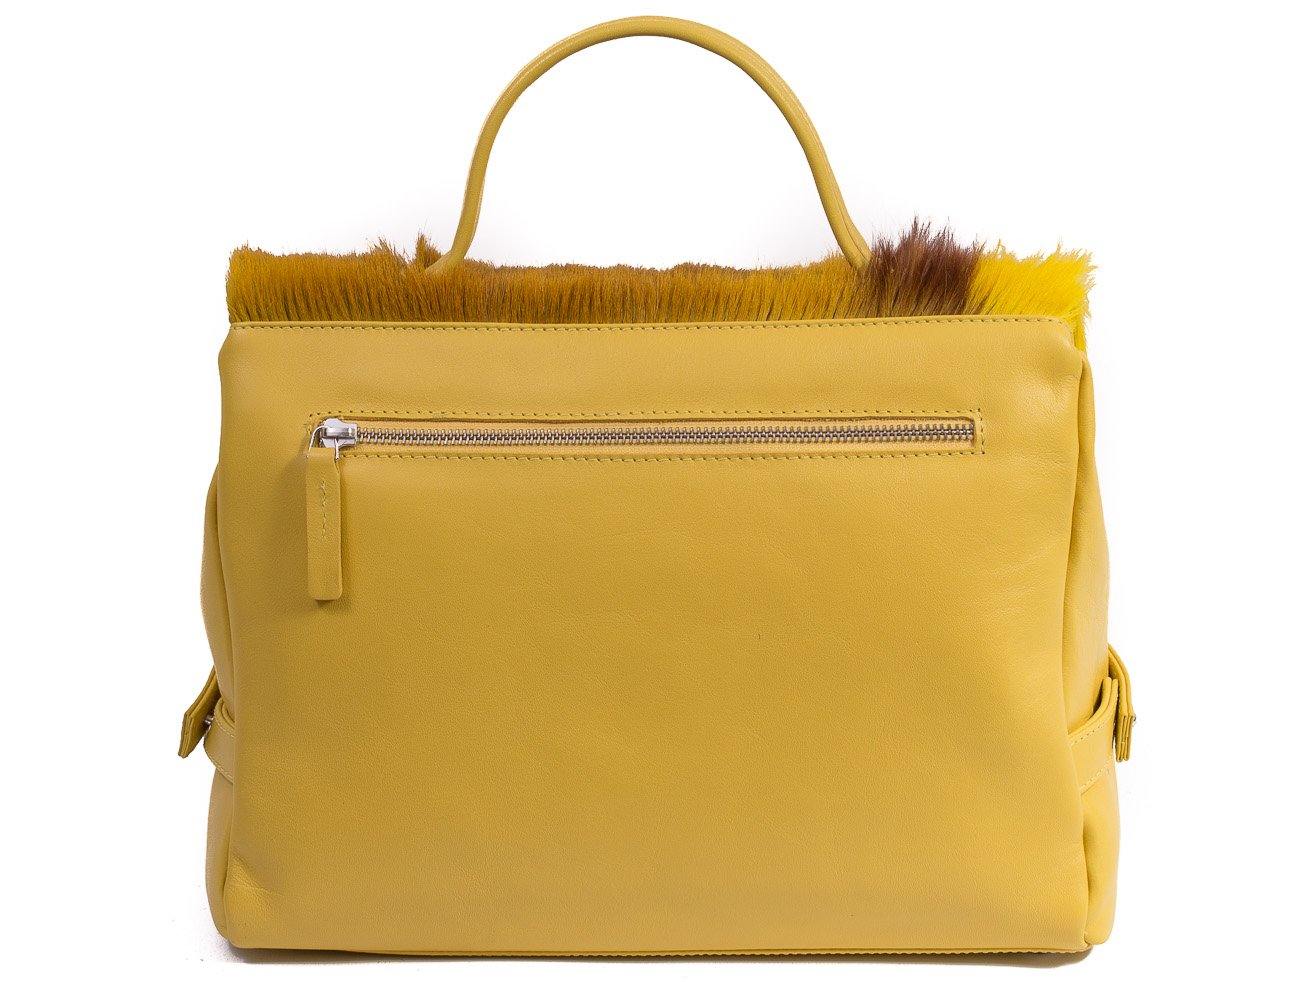 sherene melinda springbok hair-on-hide yellow leather smith tote bag Stripe back